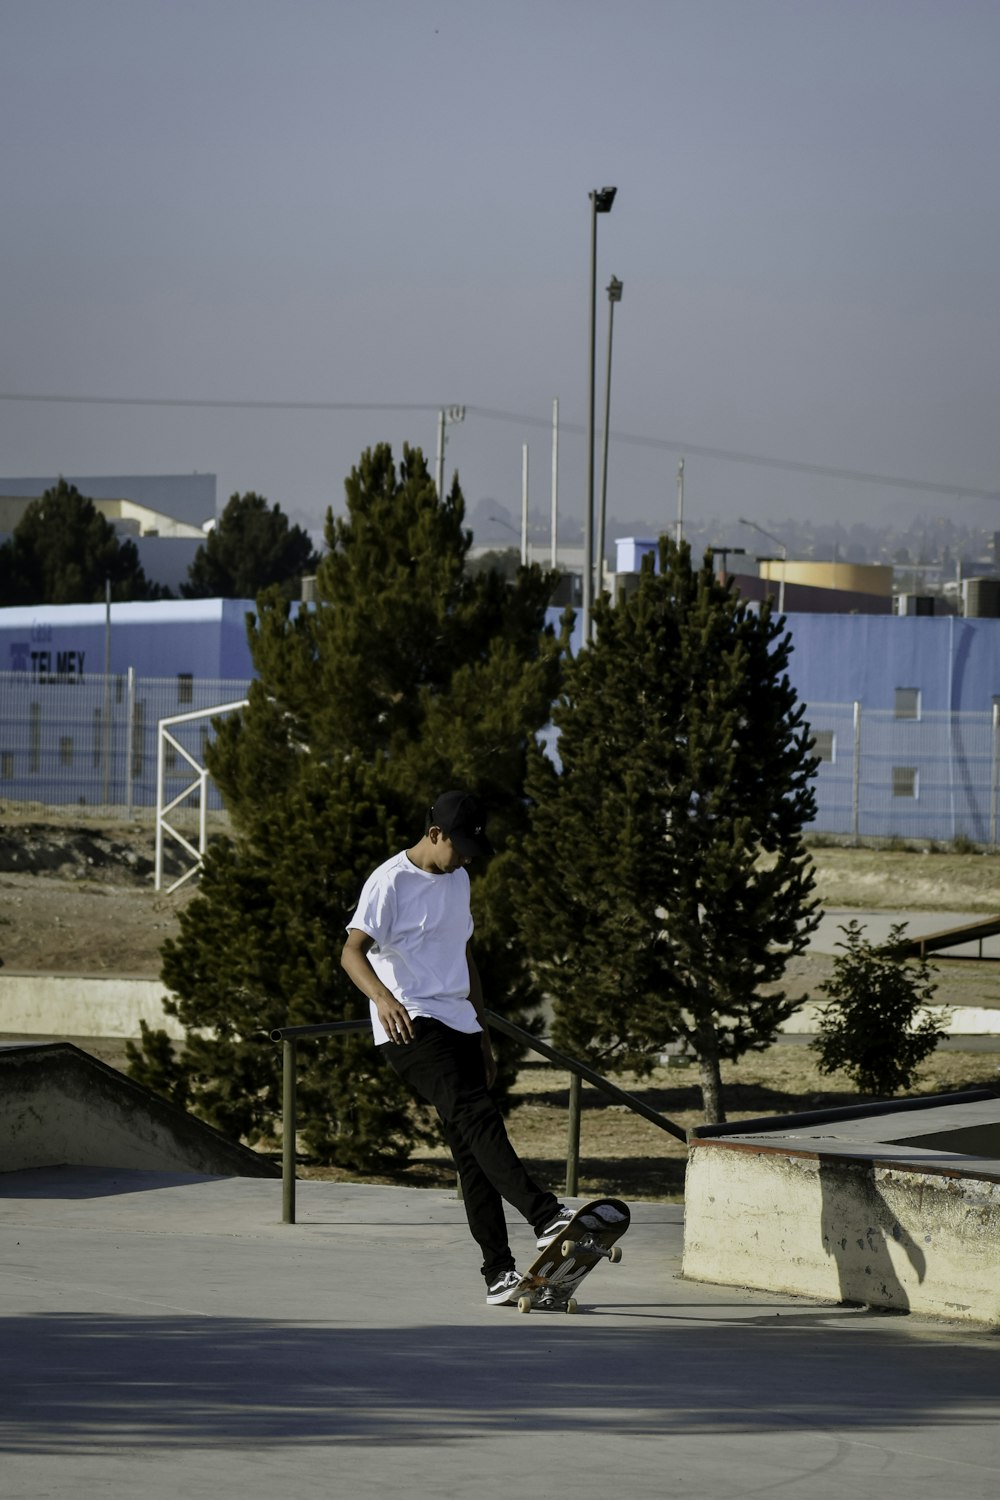 man in white t-shirt and black pants riding on black skateboard during daytime